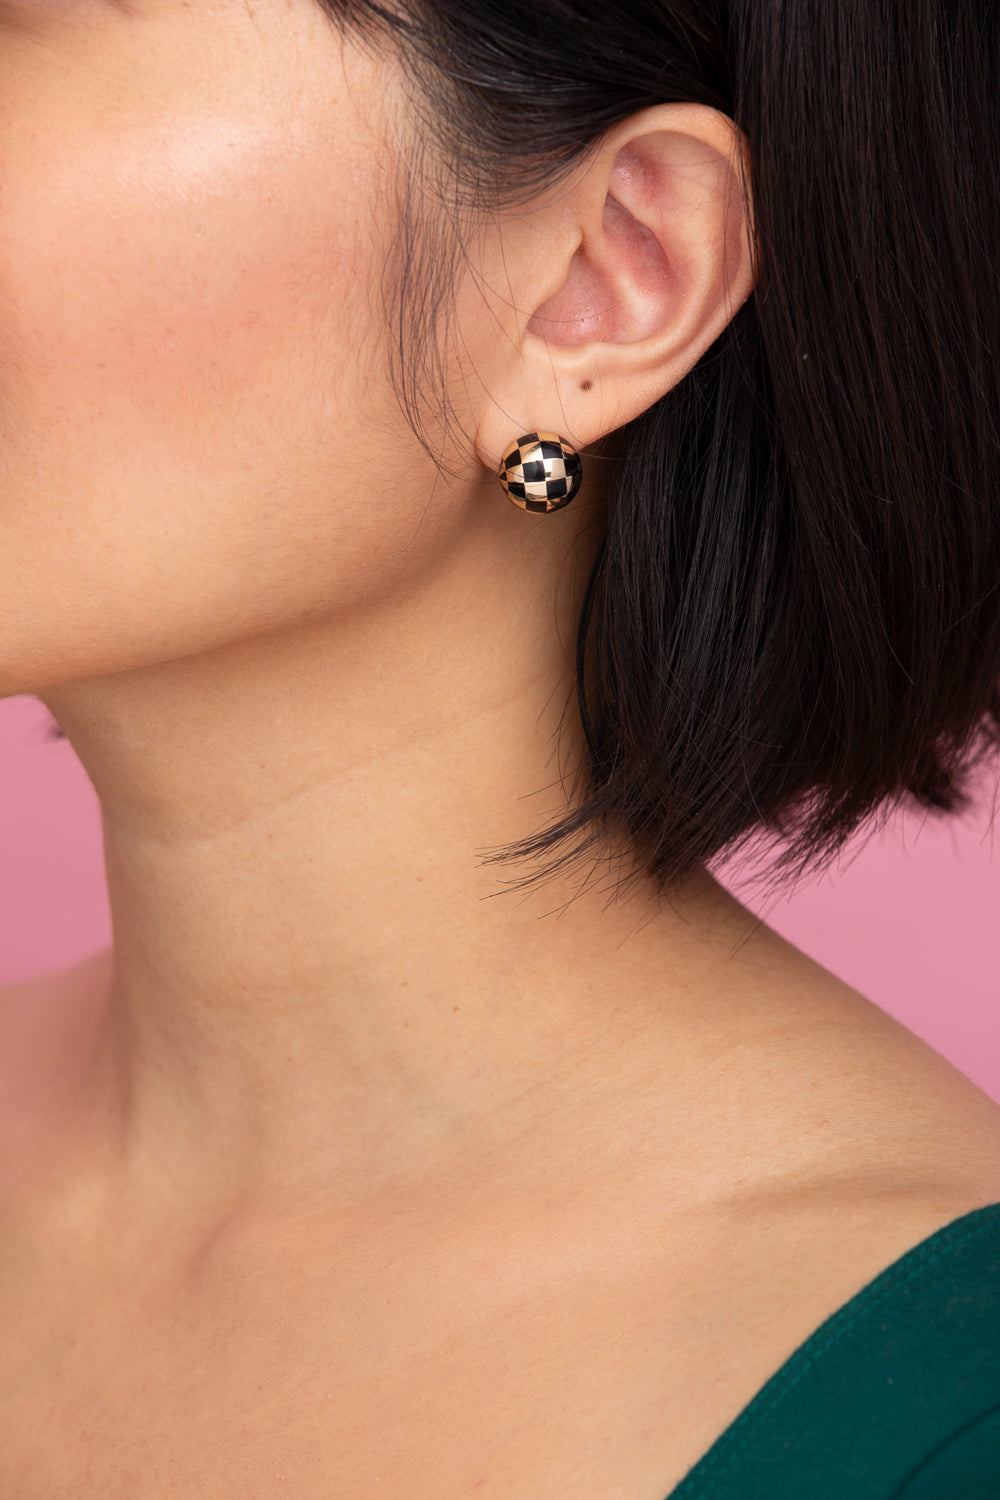 Rachel Quinn Jewelry black and 14k yellow gold checkered ball earring pair on female model ear.